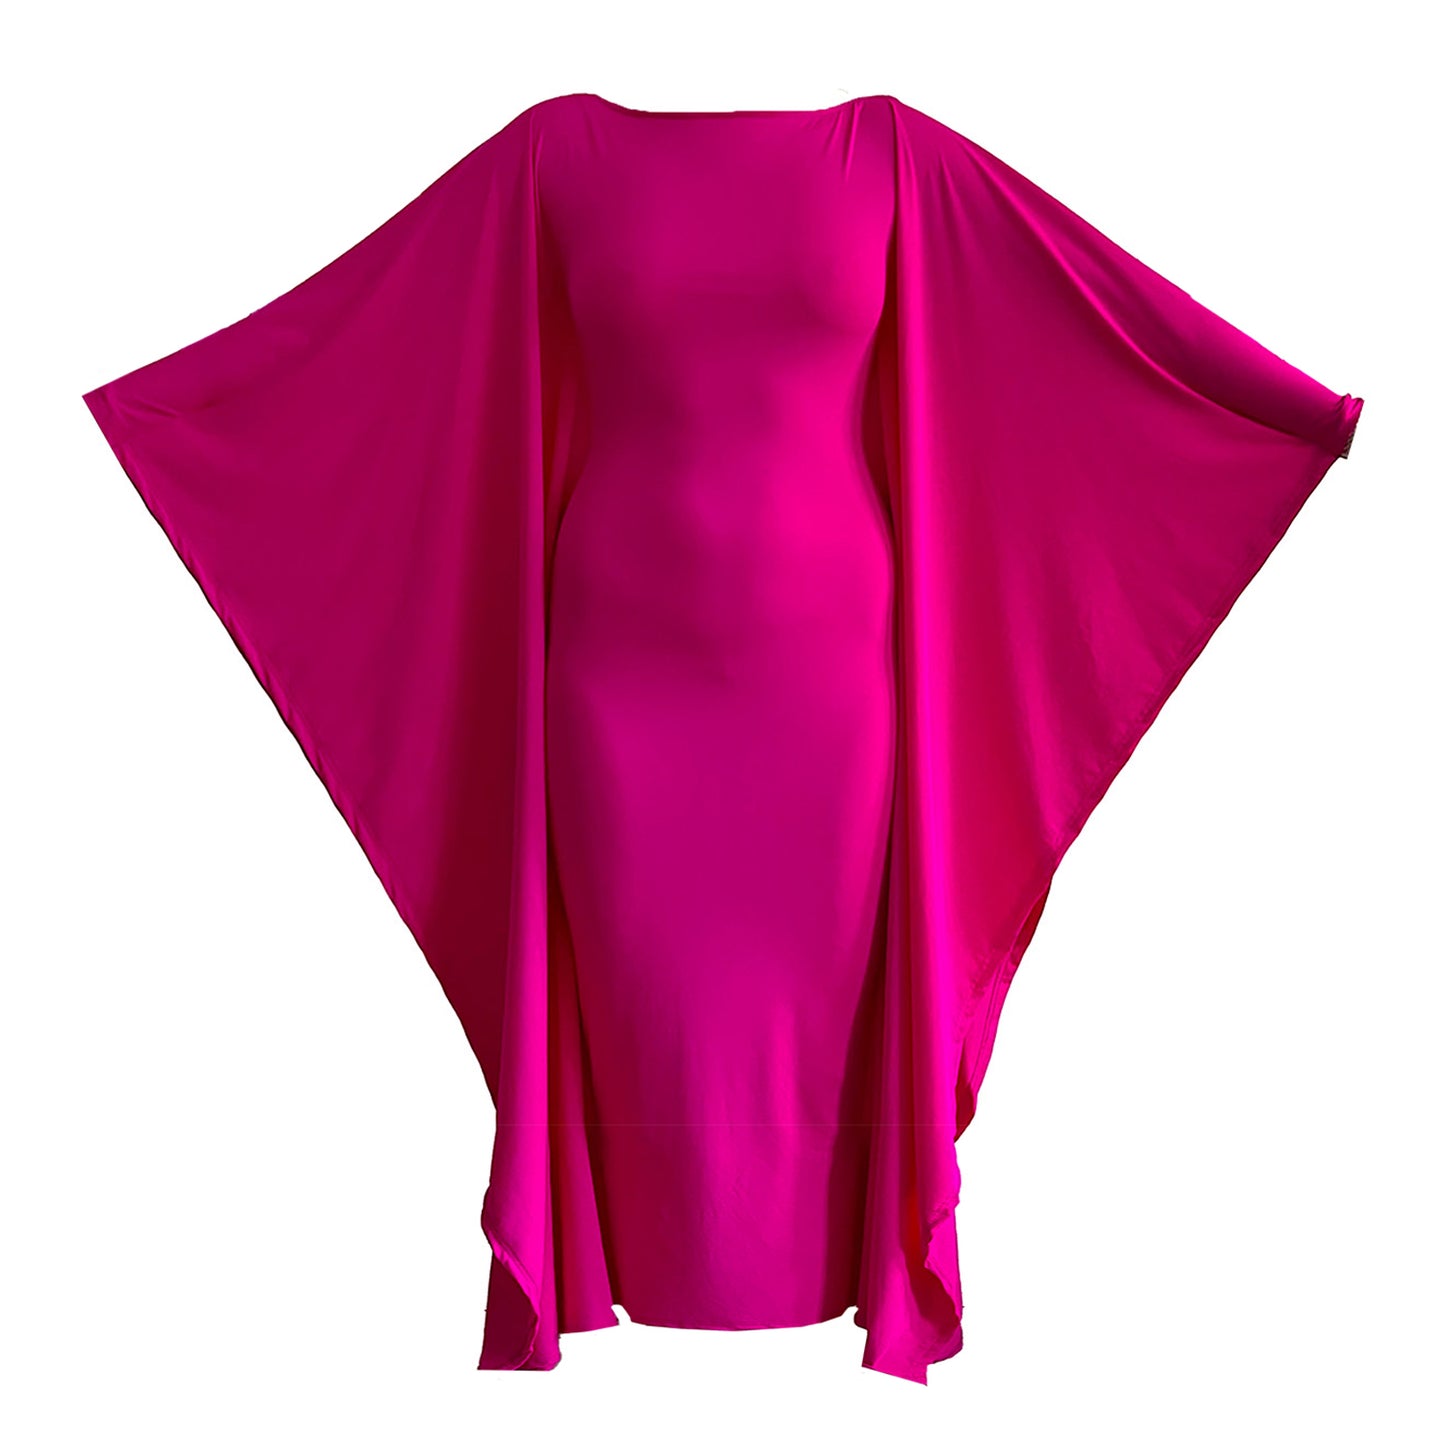 Super batwoman dress pink